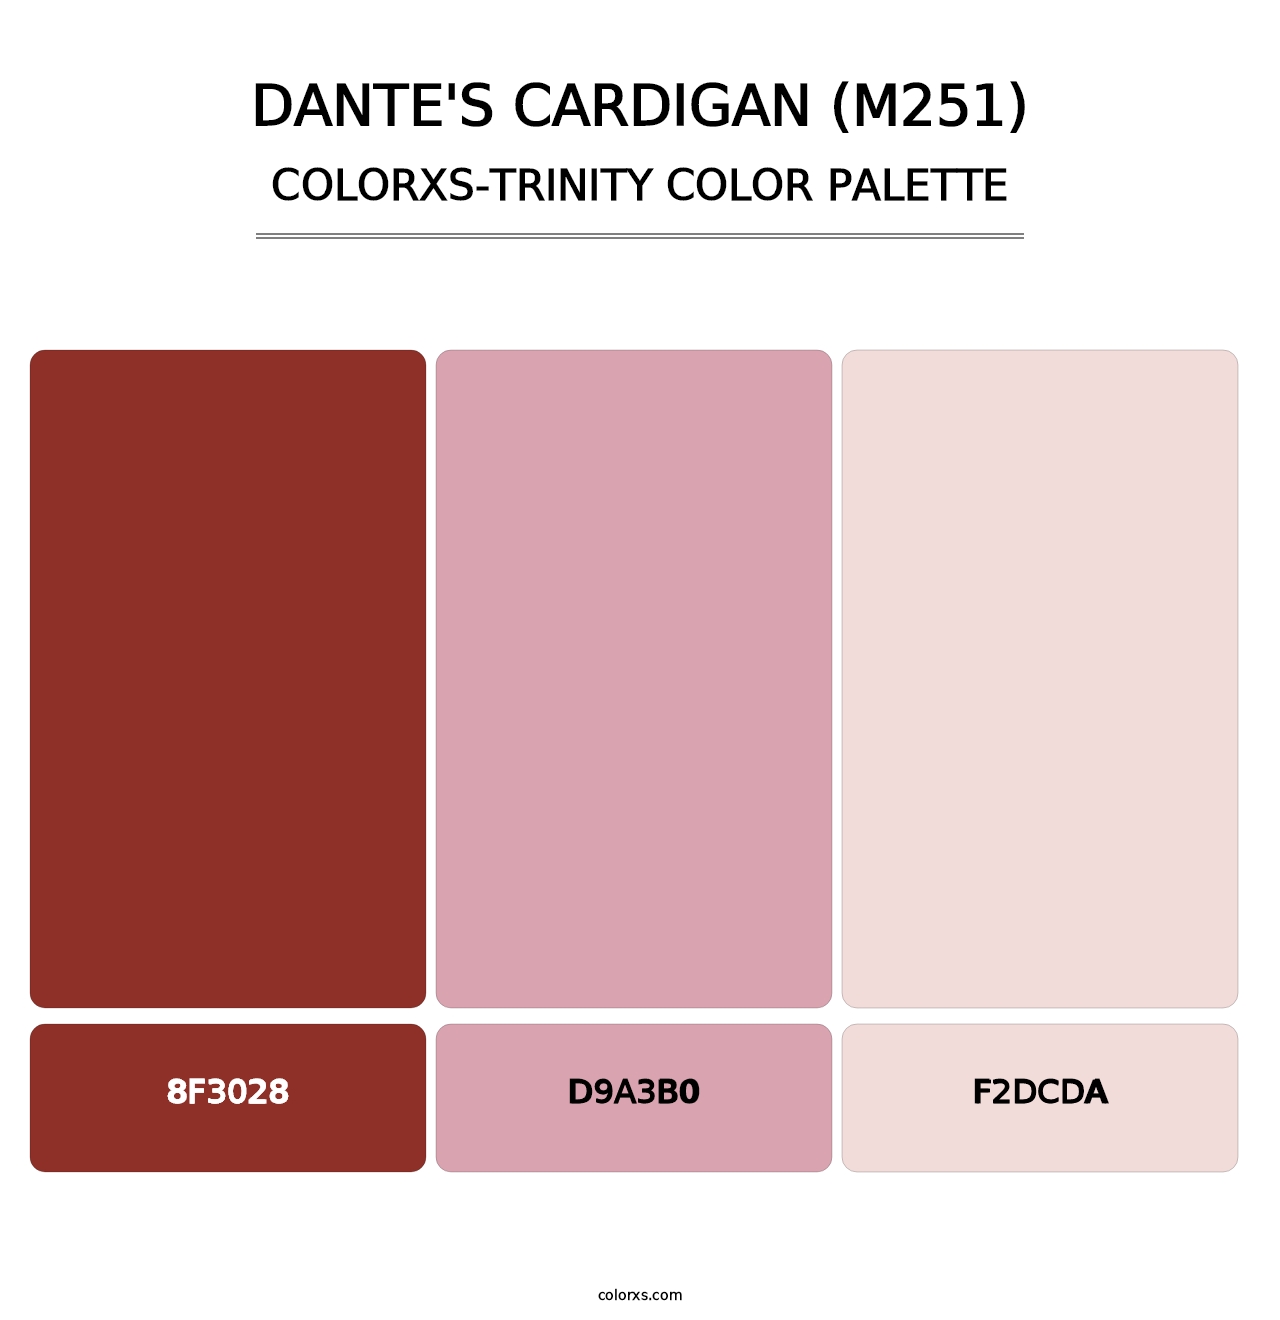 Dante's Cardigan (M251) - Colorxs Trinity Palette